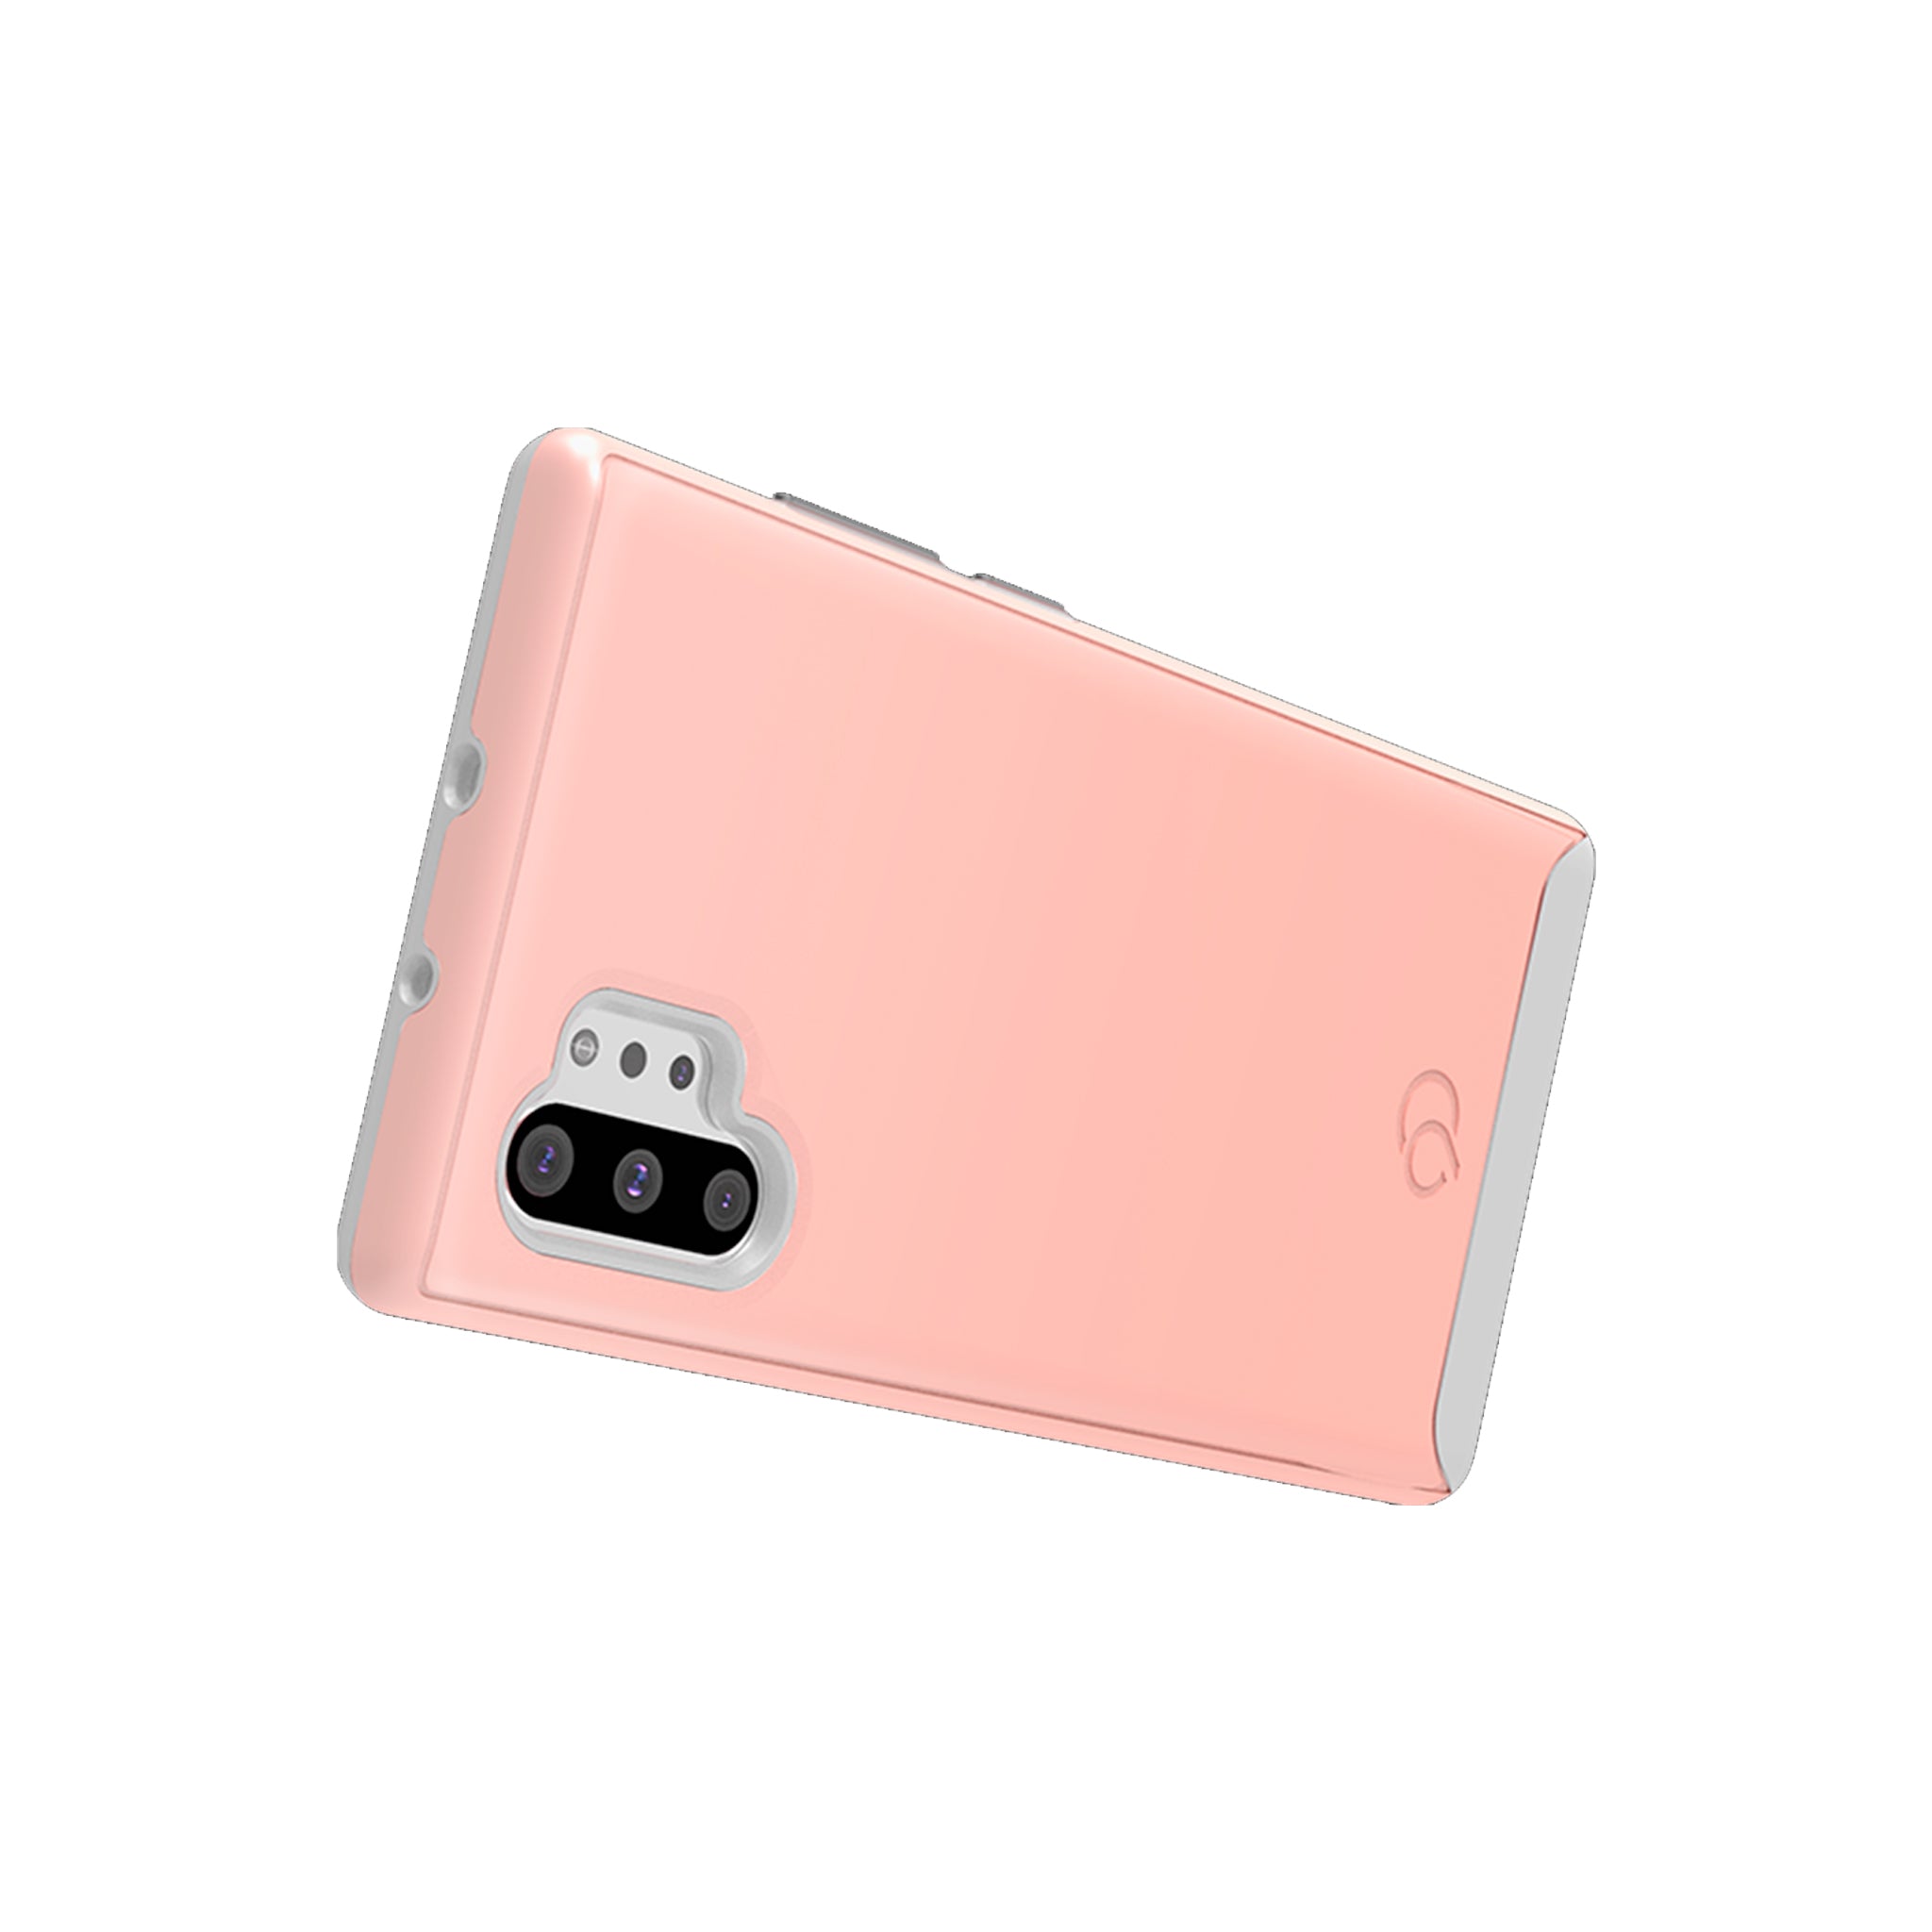 Nimbus9 - Cirrus 2 Case For Samsung Galaxy Note10 Plus - Rose Clear